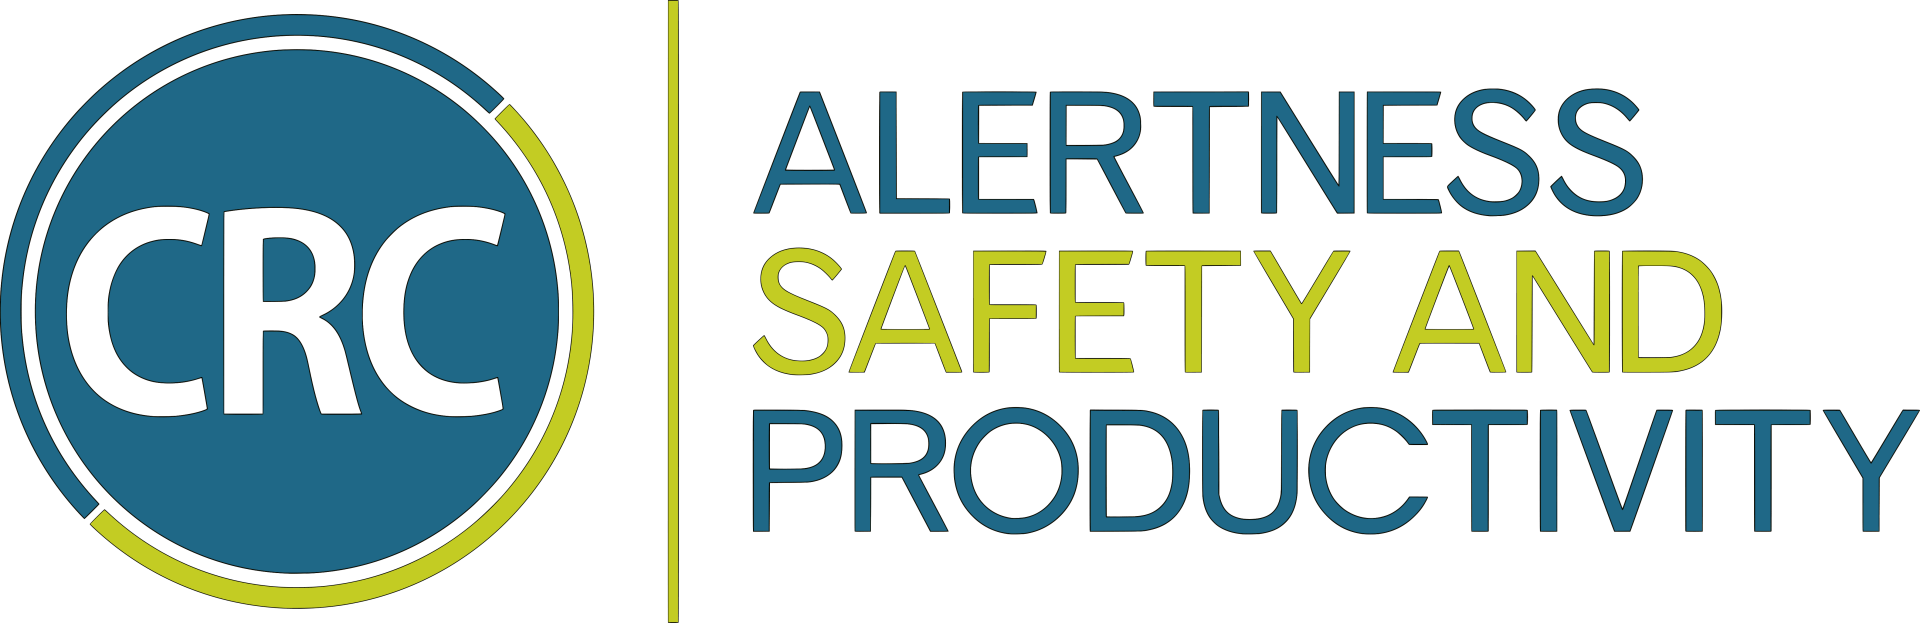 Alertness and productivity